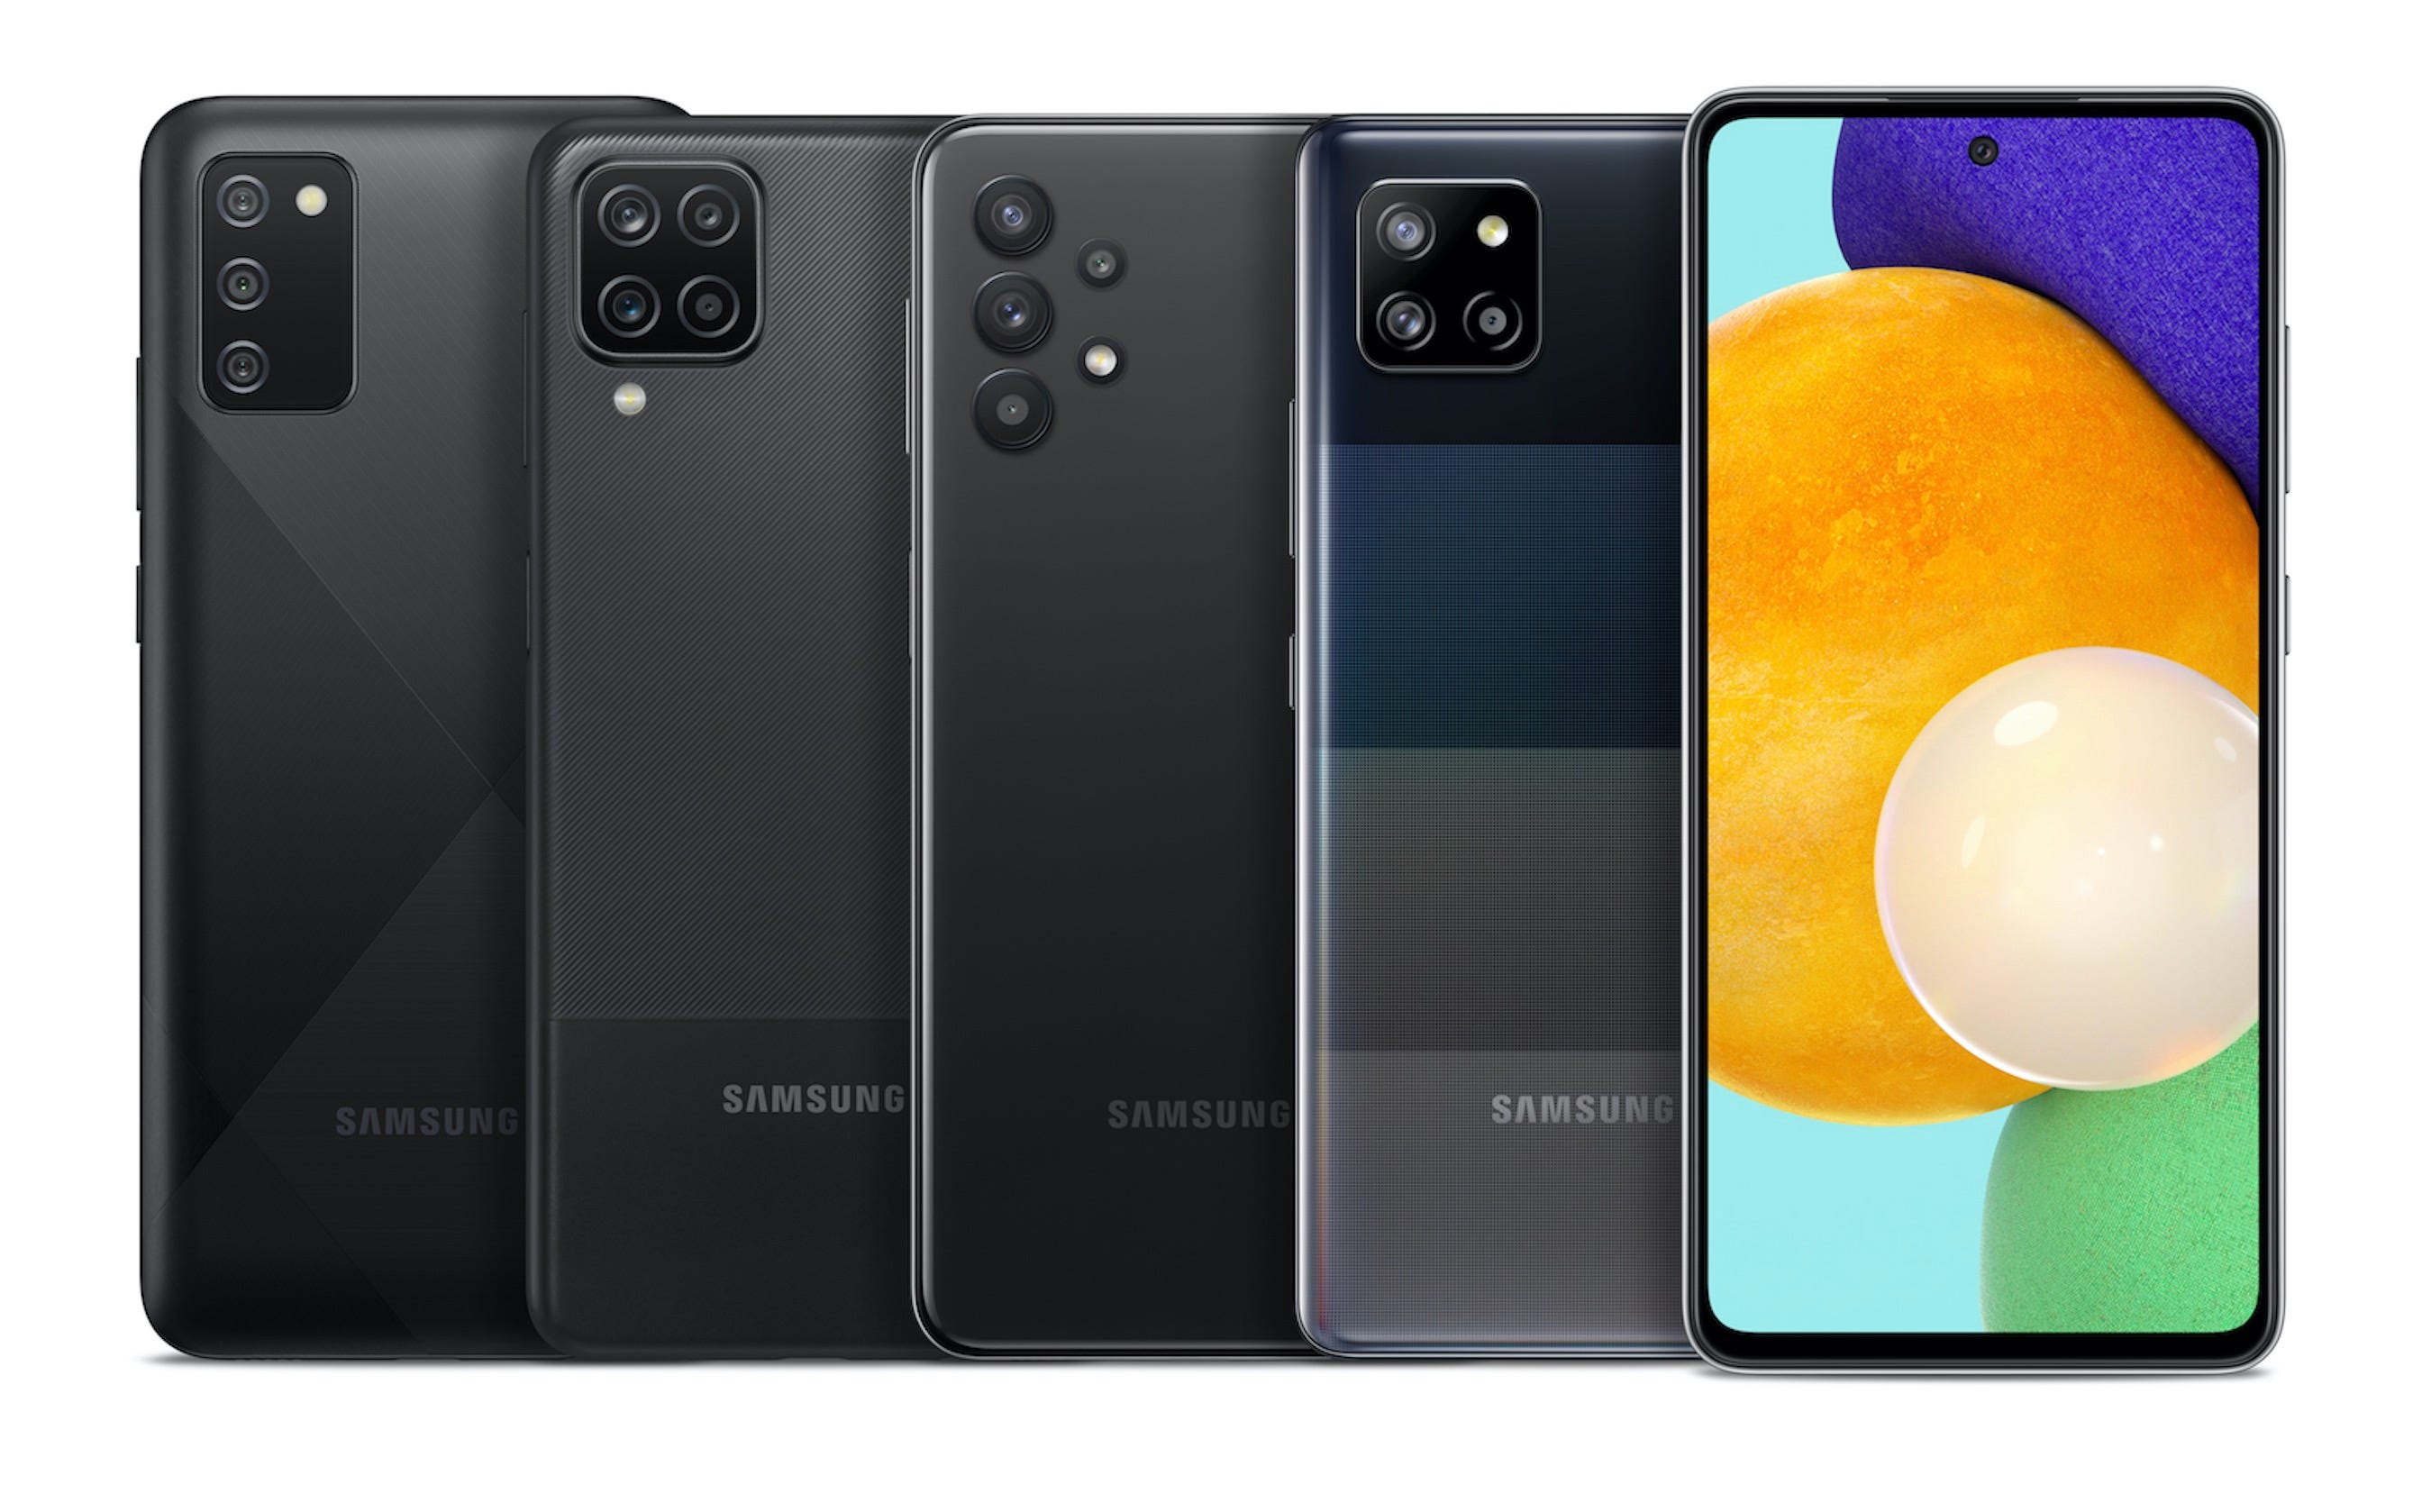 Samsung's Galaxy A smartphones range $109 to $499